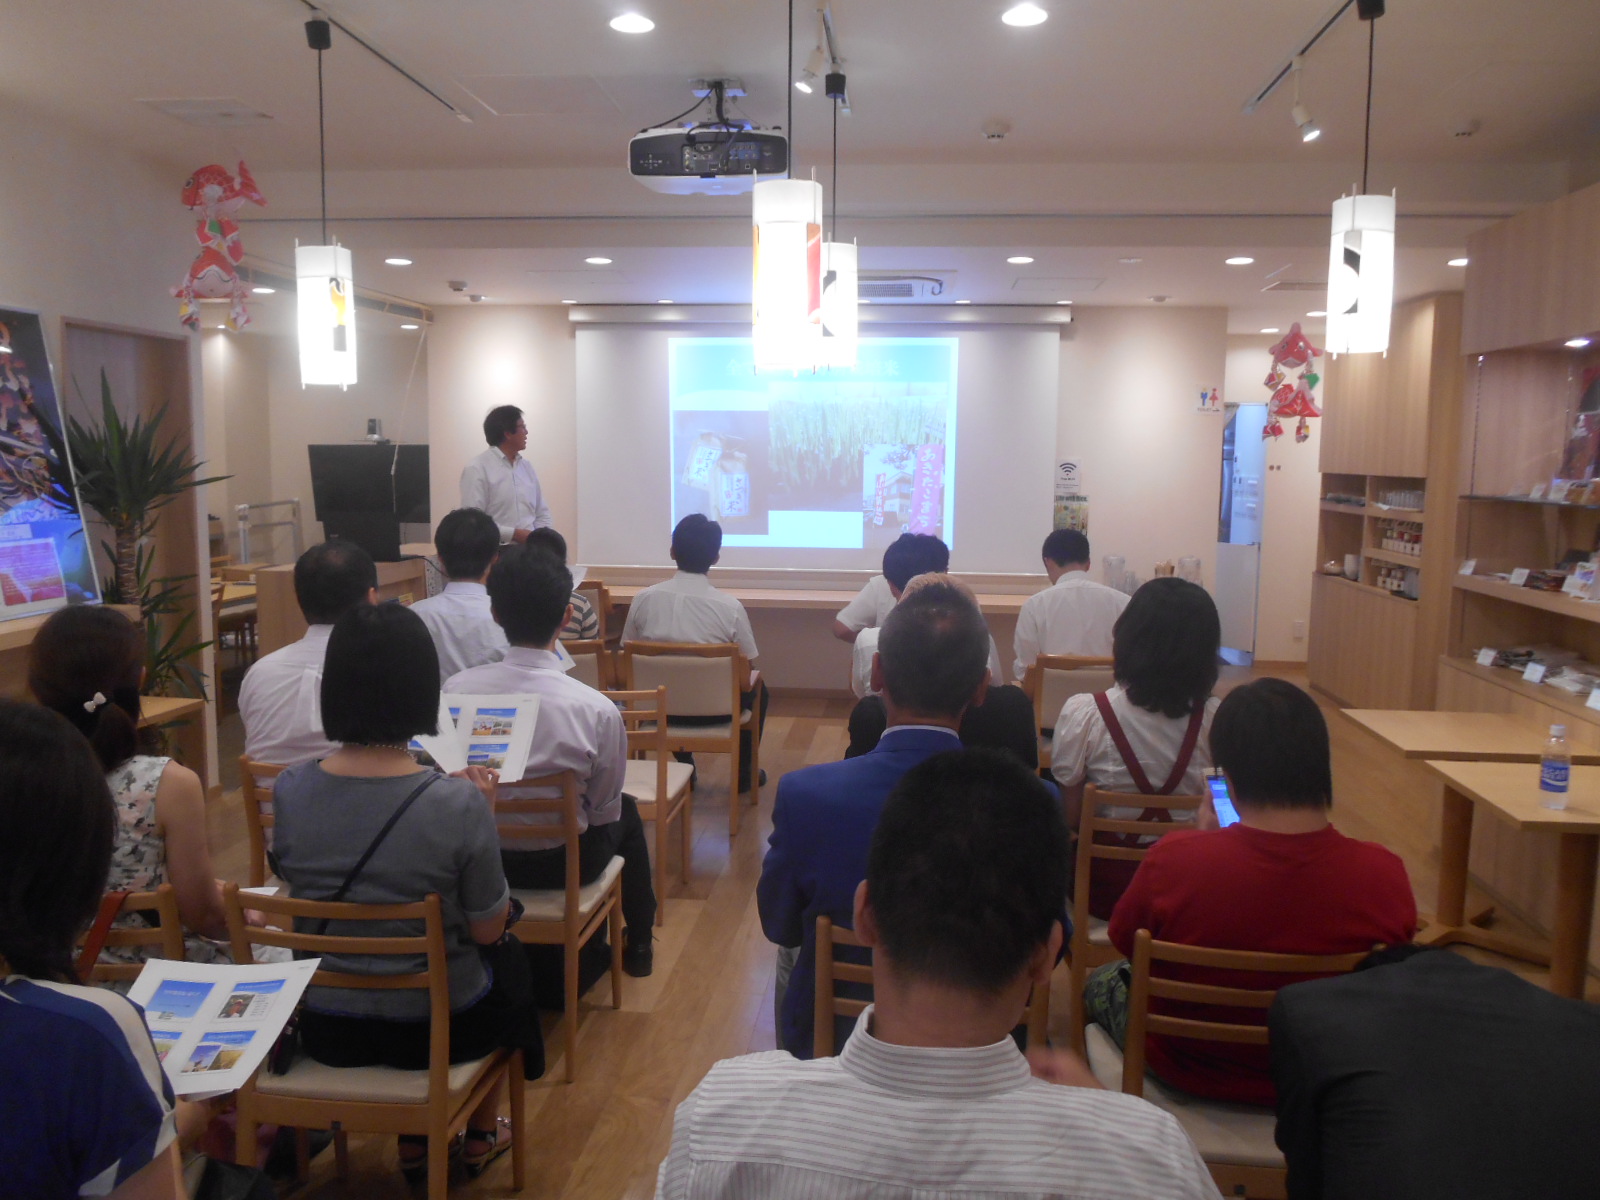 DSCN1831 - AoMoLink〜赤坂〜の第2回勉強会&交流会開催します。